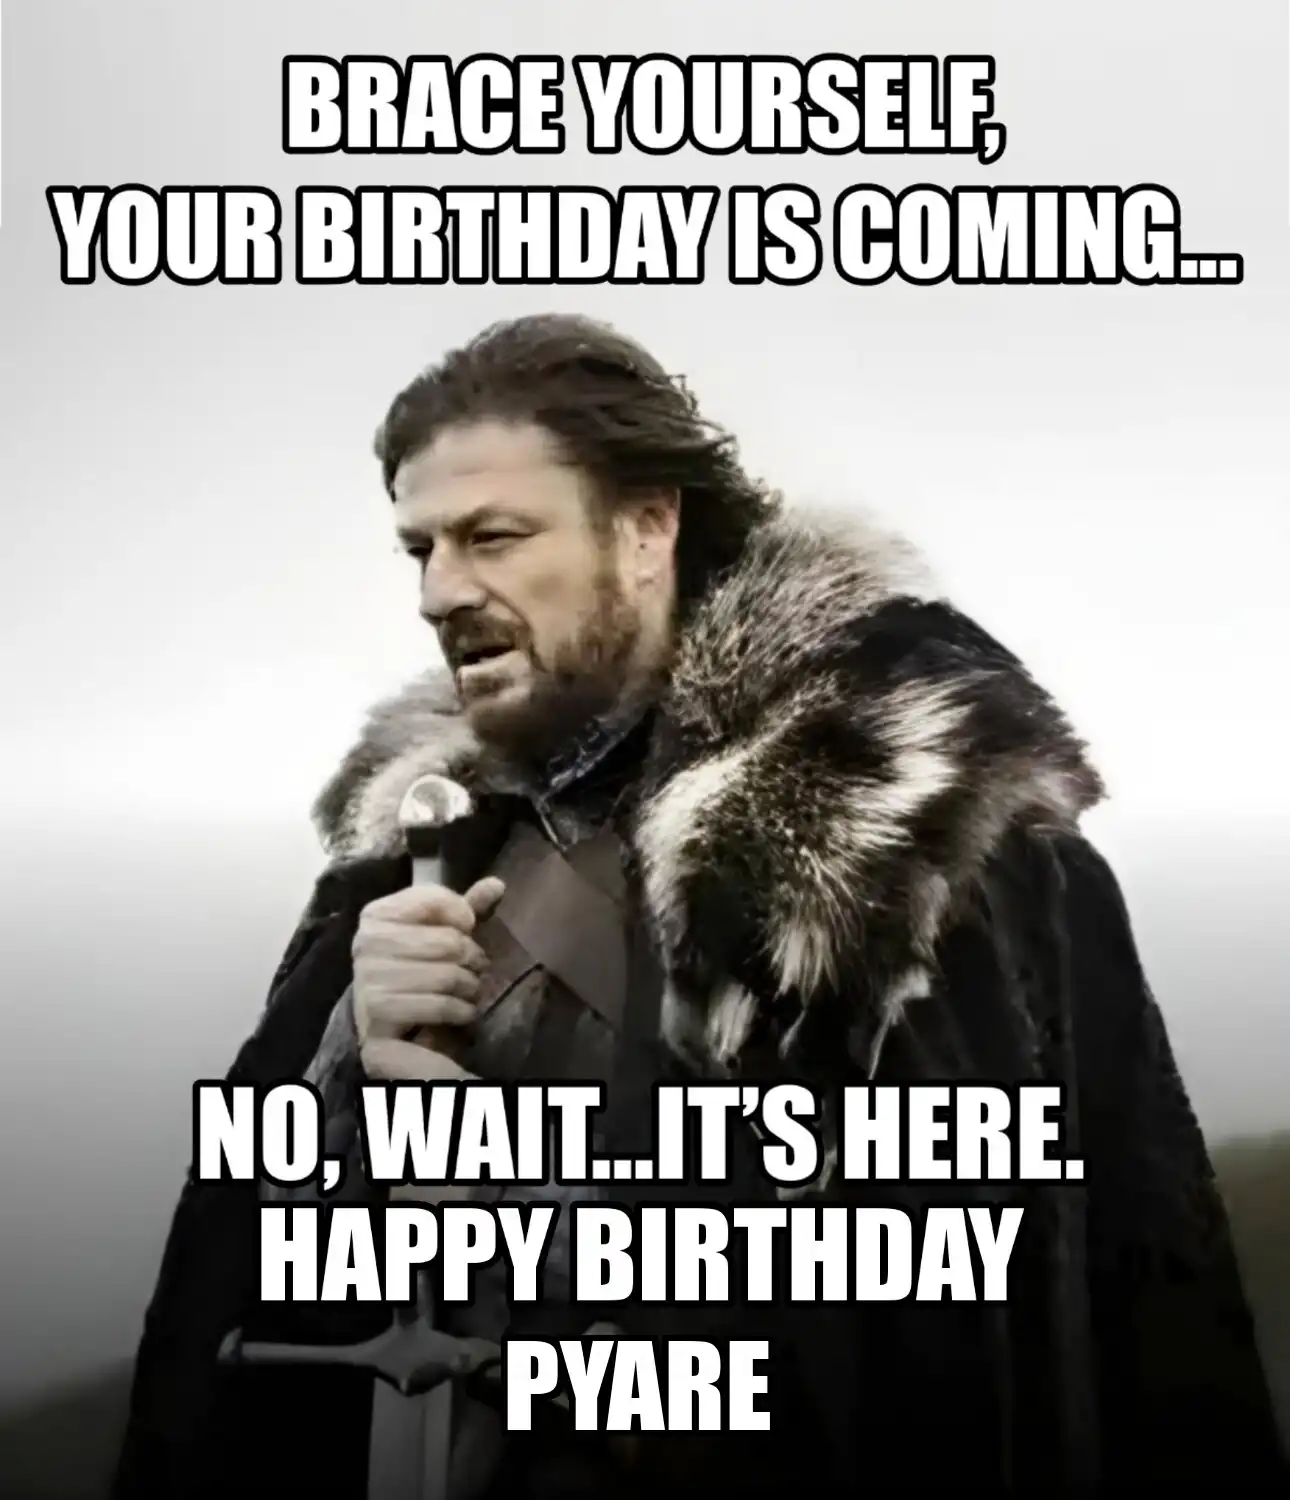 Happy Birthday Pyare Brace Yourself Your Birthday Is Coming Meme